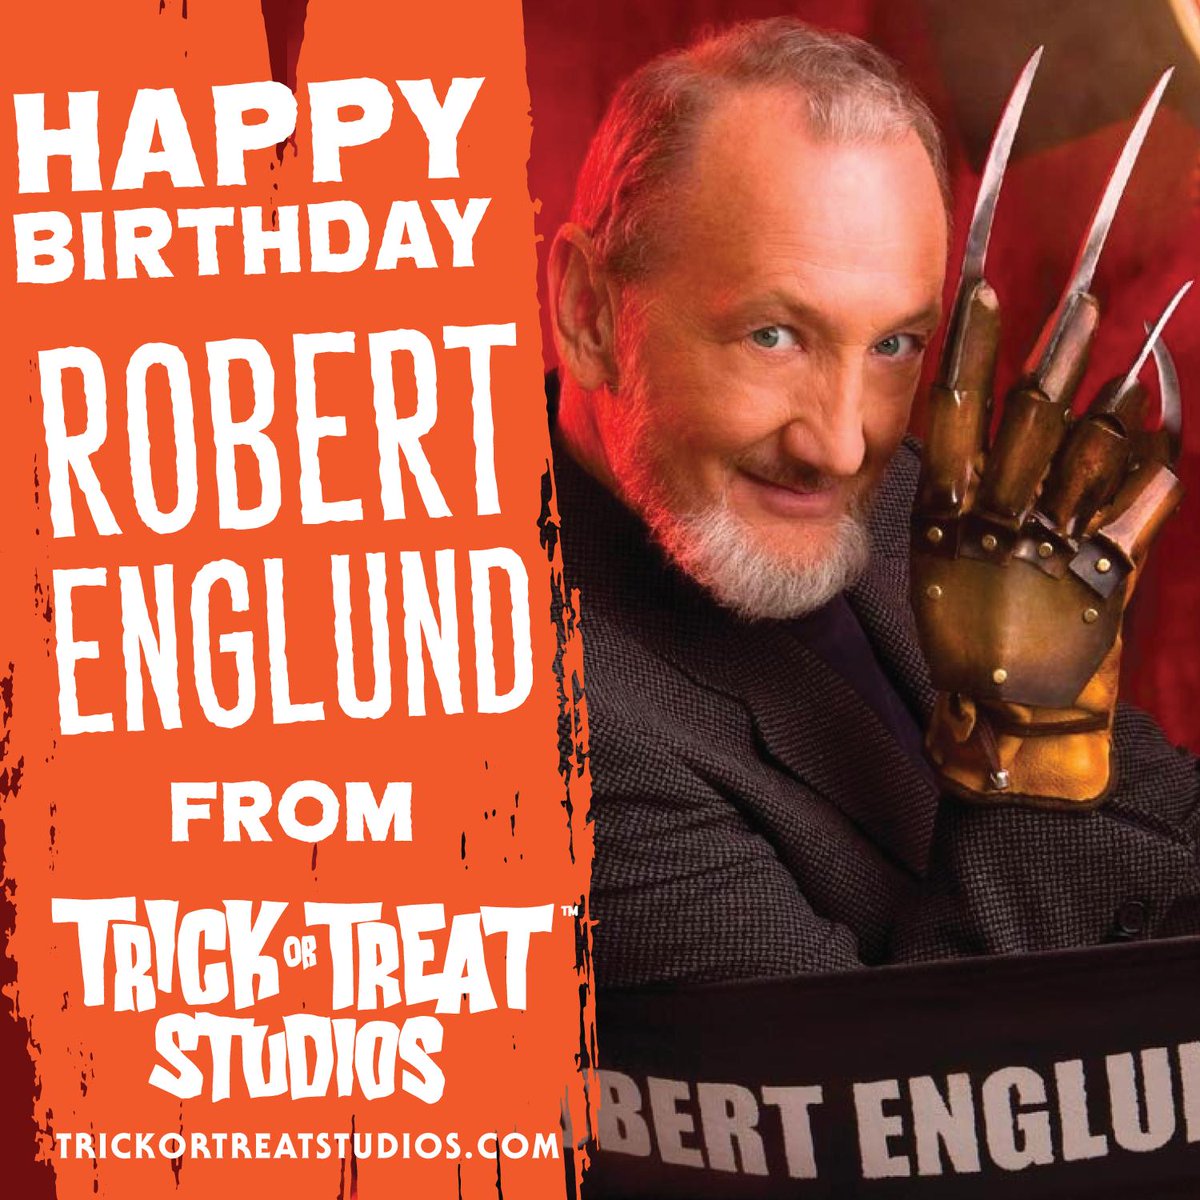 Wishing a very happy birthday to the horror icon Robert Englund!
Shop our full line of Nightmare on Elm Street products at trickortreatstudios.com!
#neversleepagain #nightmareonelmstreet #robertenglund #freddykruger #trickortreatstudios